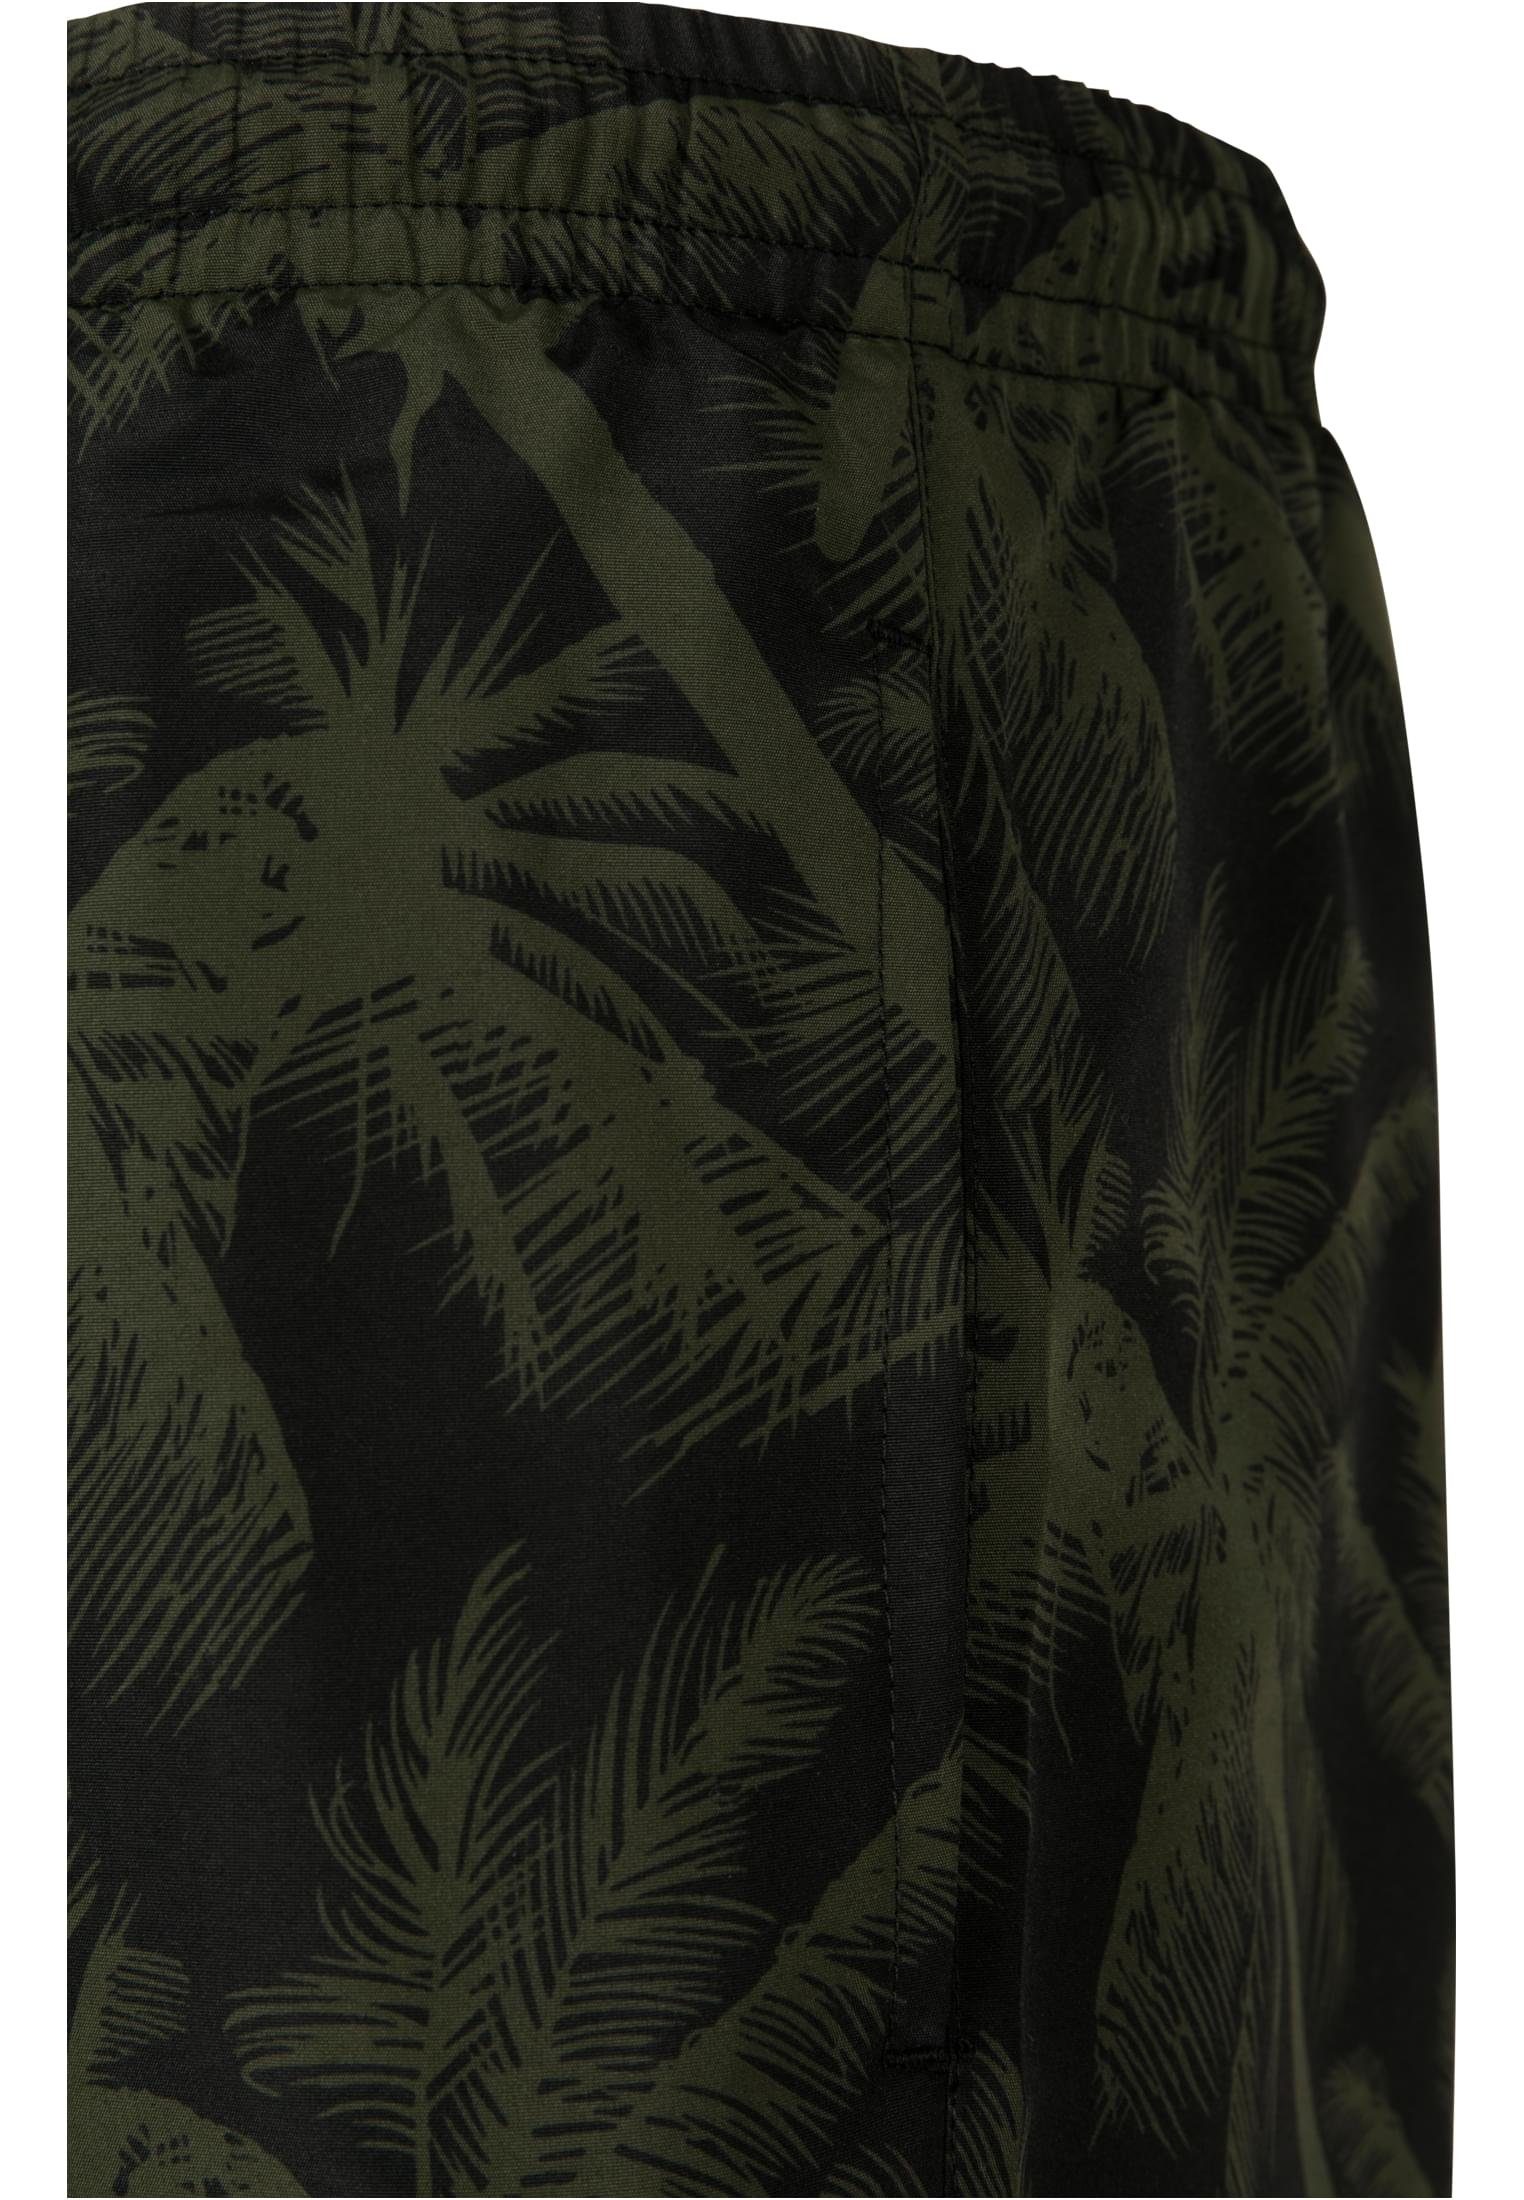 URBAN CLASSICS Shorts Badeshorts Pattern Herren palm/olive Swim